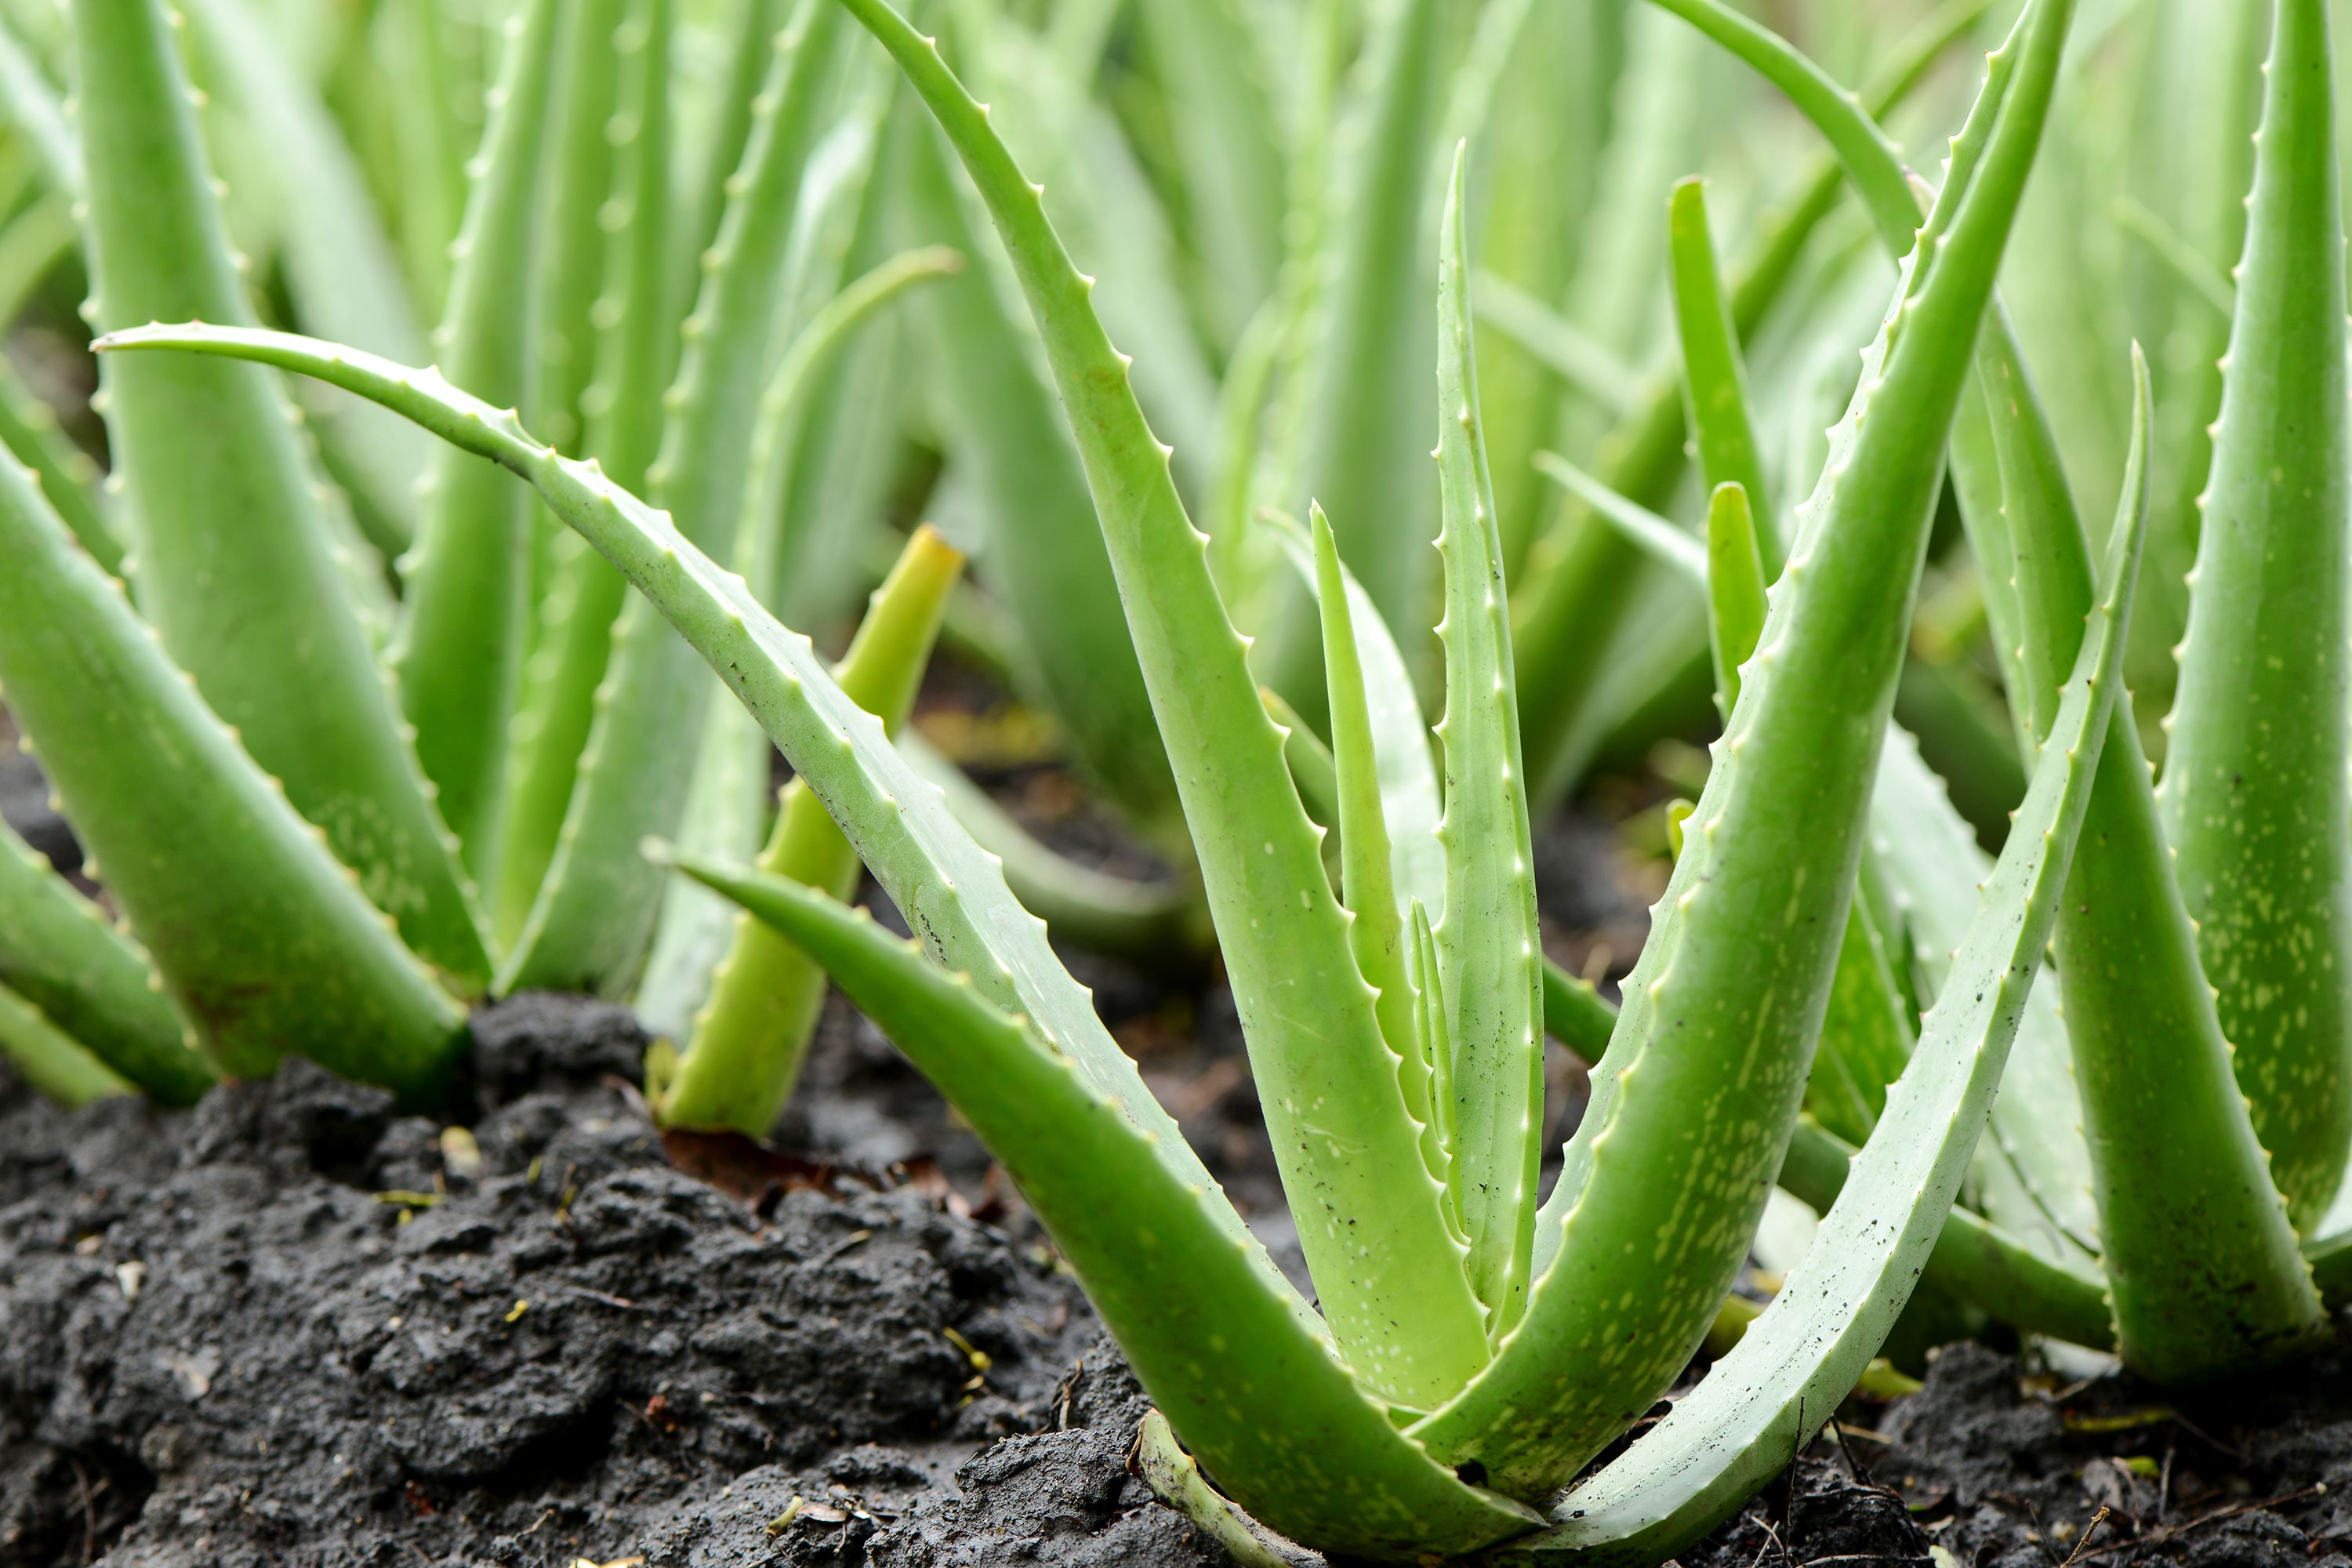 Is aloe vera part of the cactus?